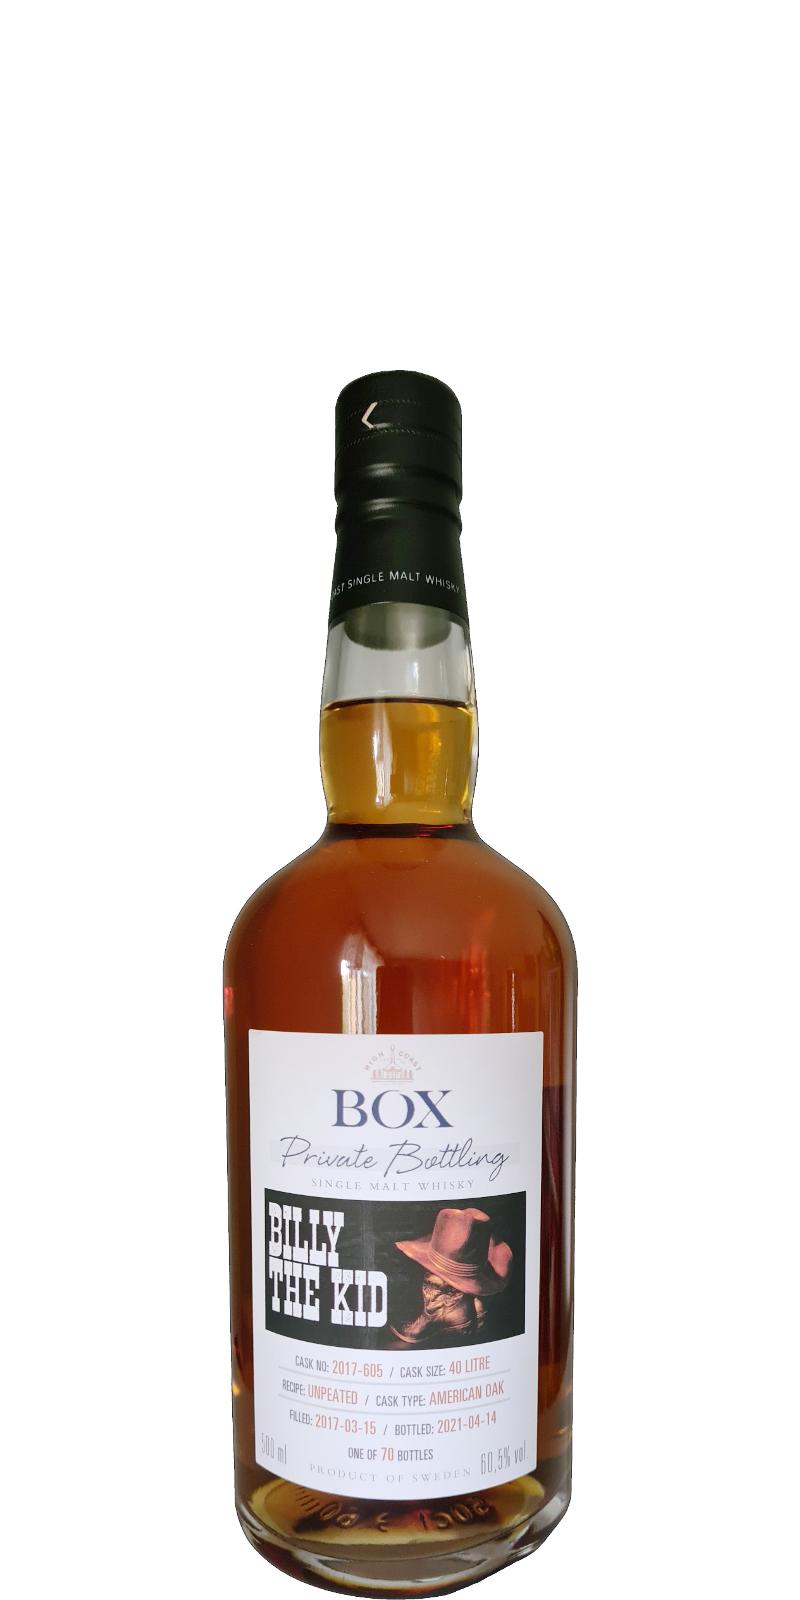 Box 2017 Billy The Kid Private Bottling Unpeated American Oak 2017-605 60.5% 500ml